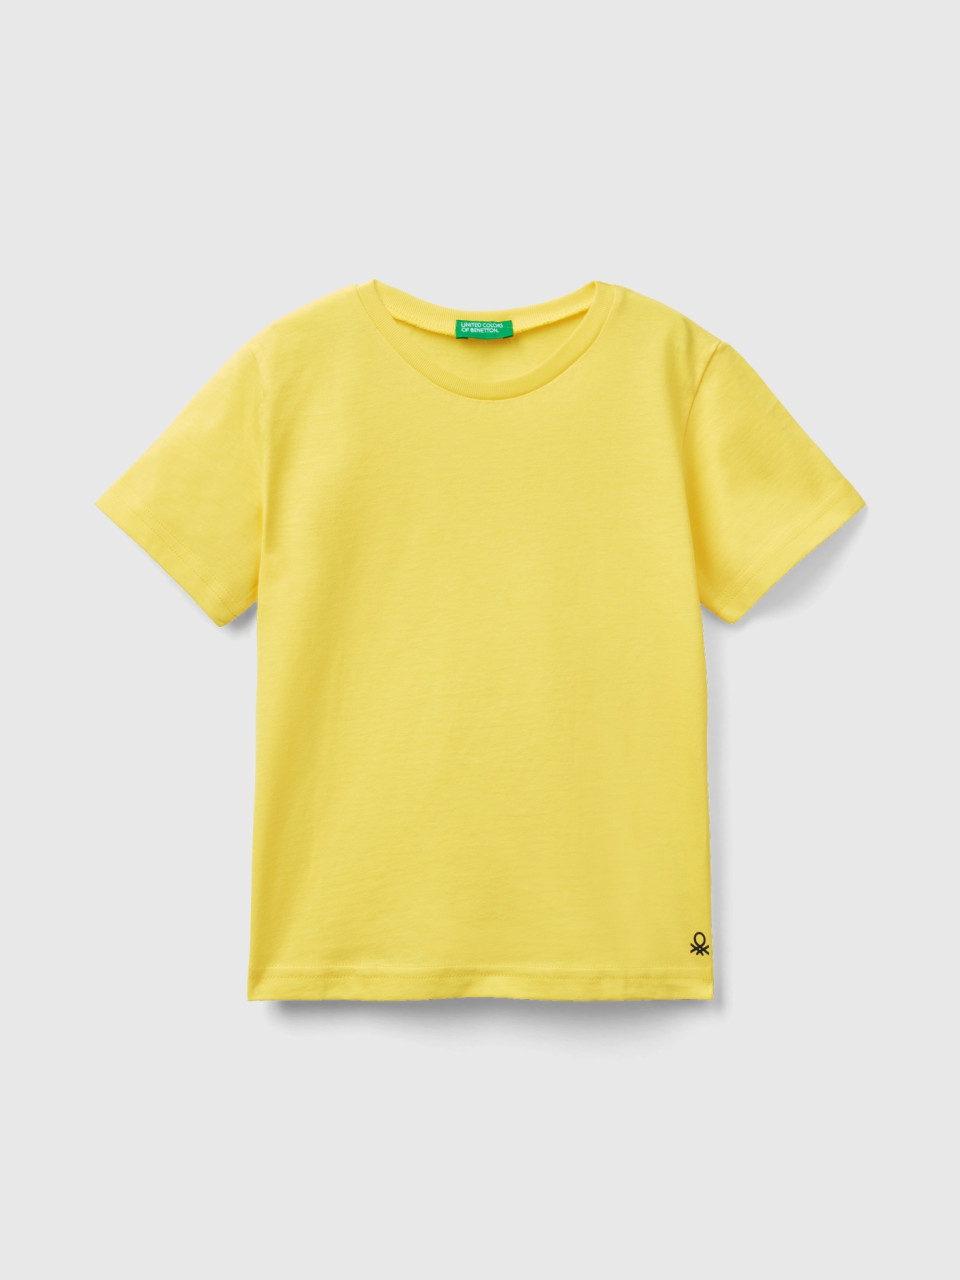 Benetton, Camiseta De Algodón Orgánico, Amarillo, Niños